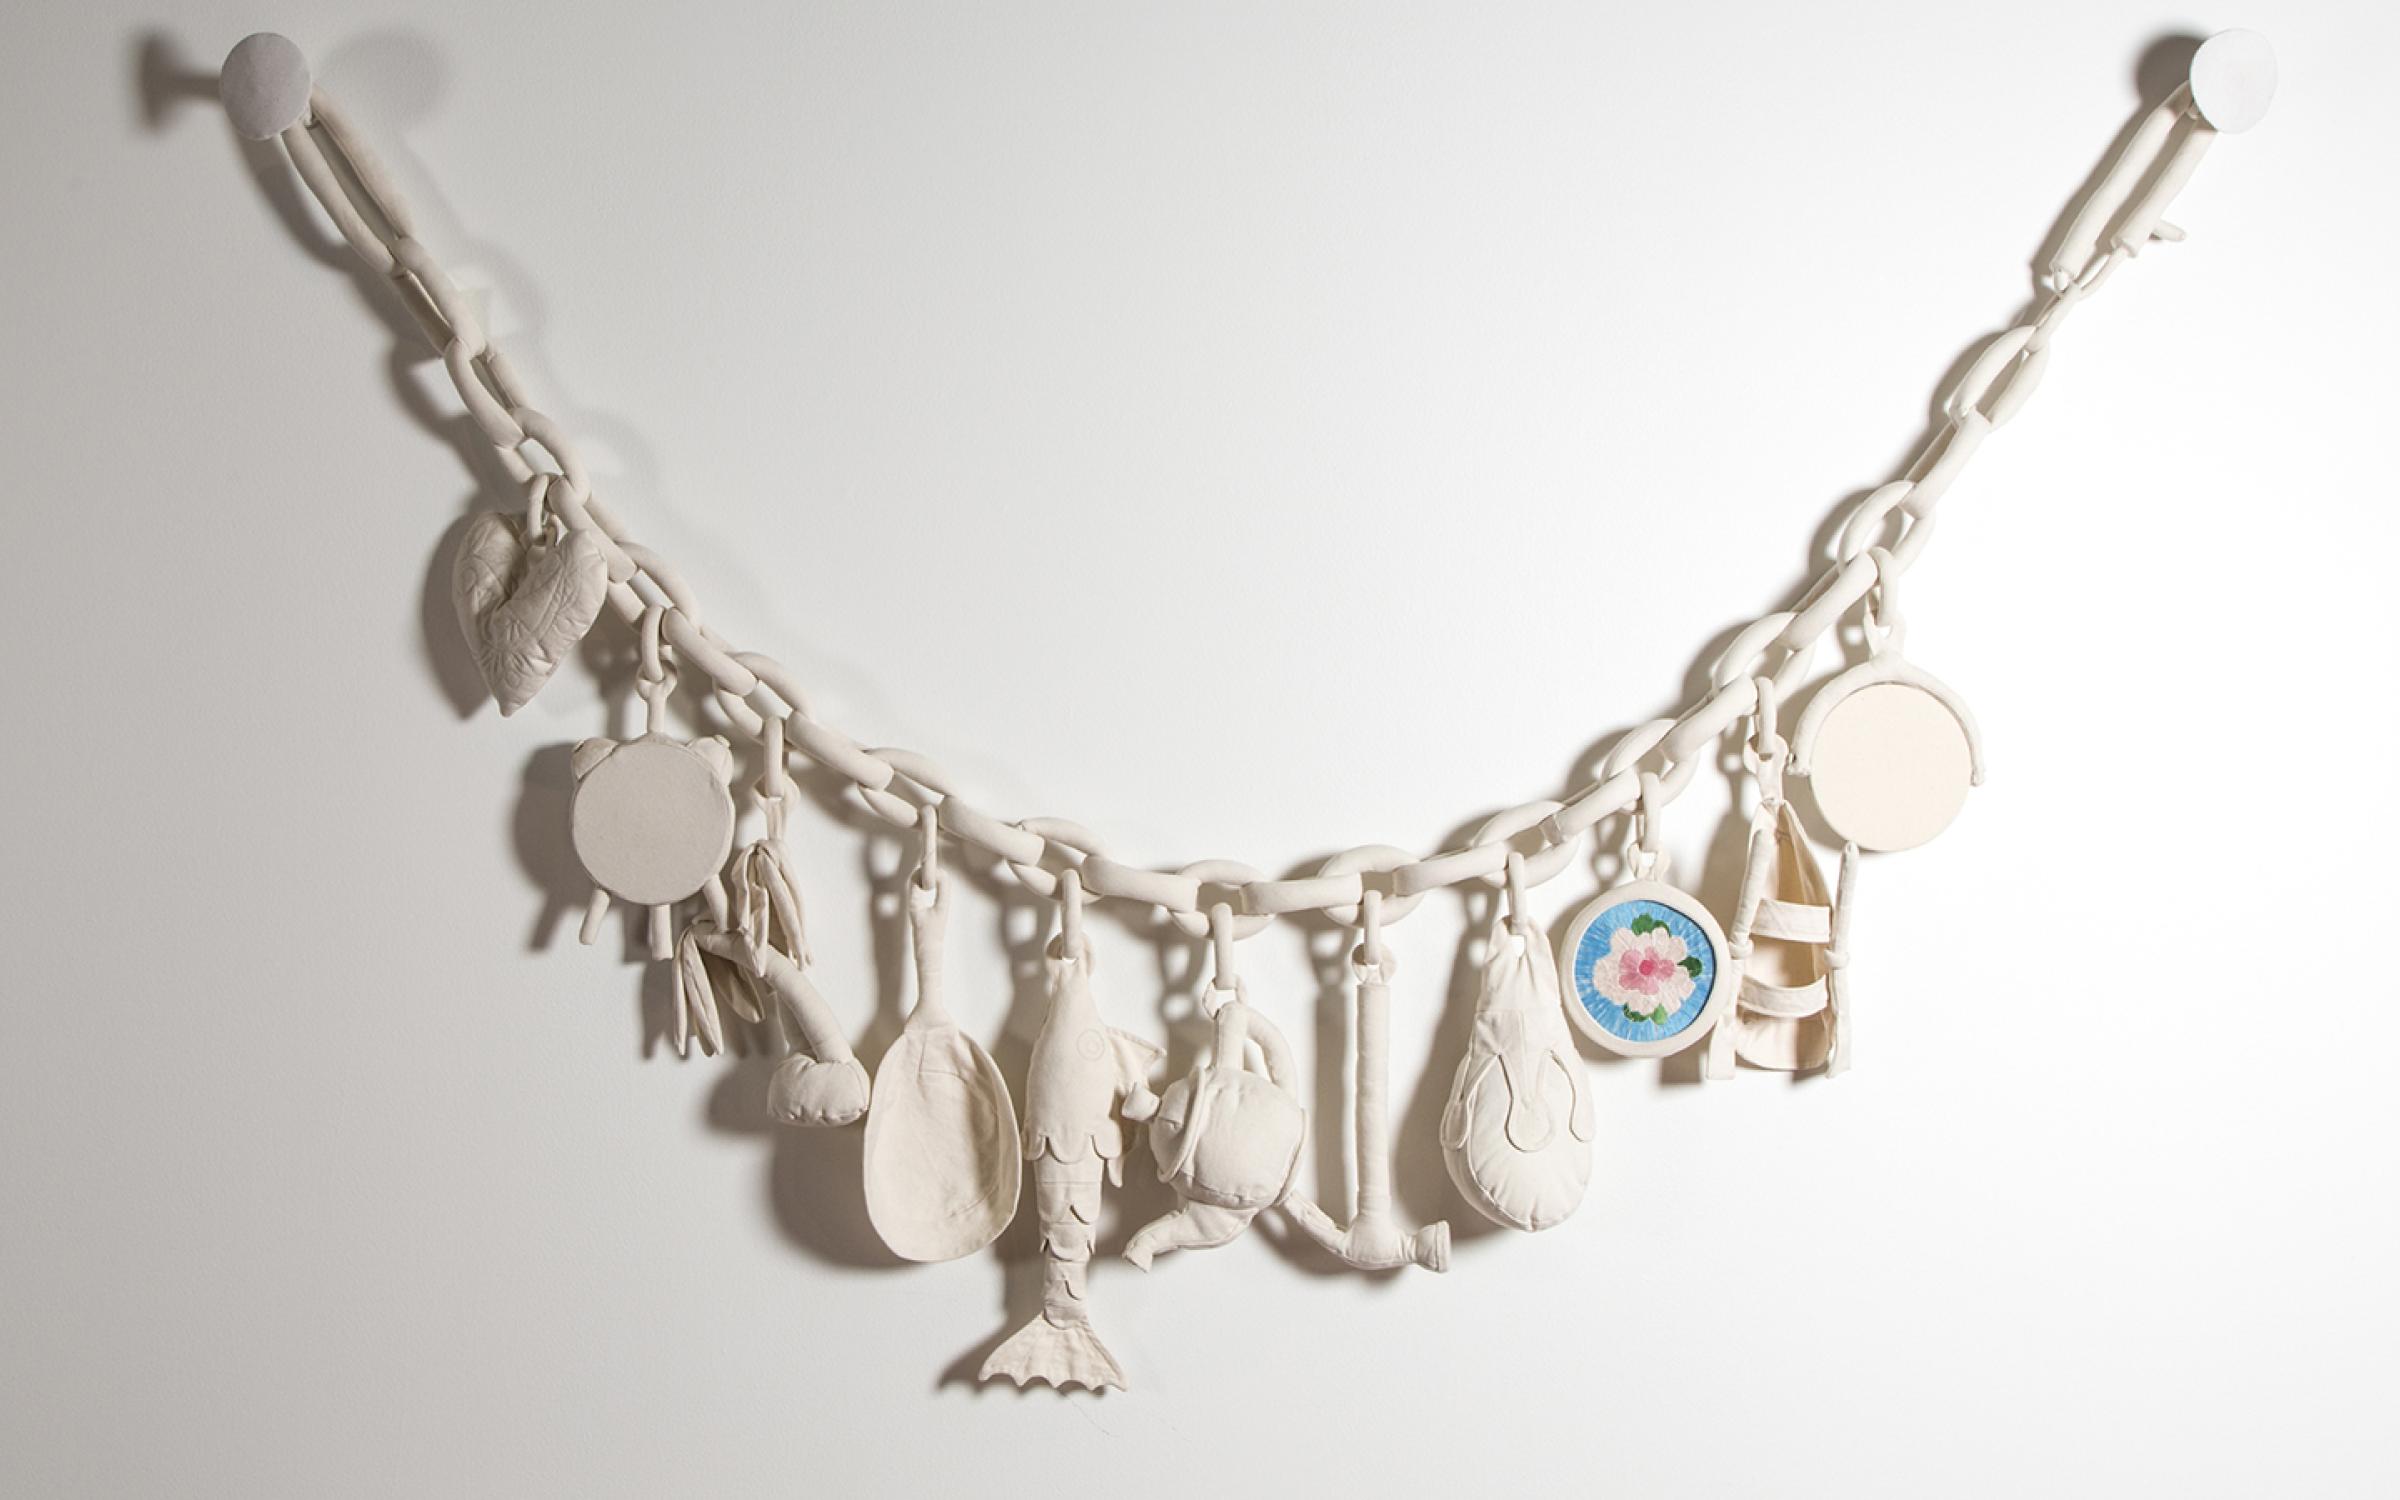 The White Charm Bracelet,  Jann Haworth, American, soft sculpture, original circa 1964, remade 2004